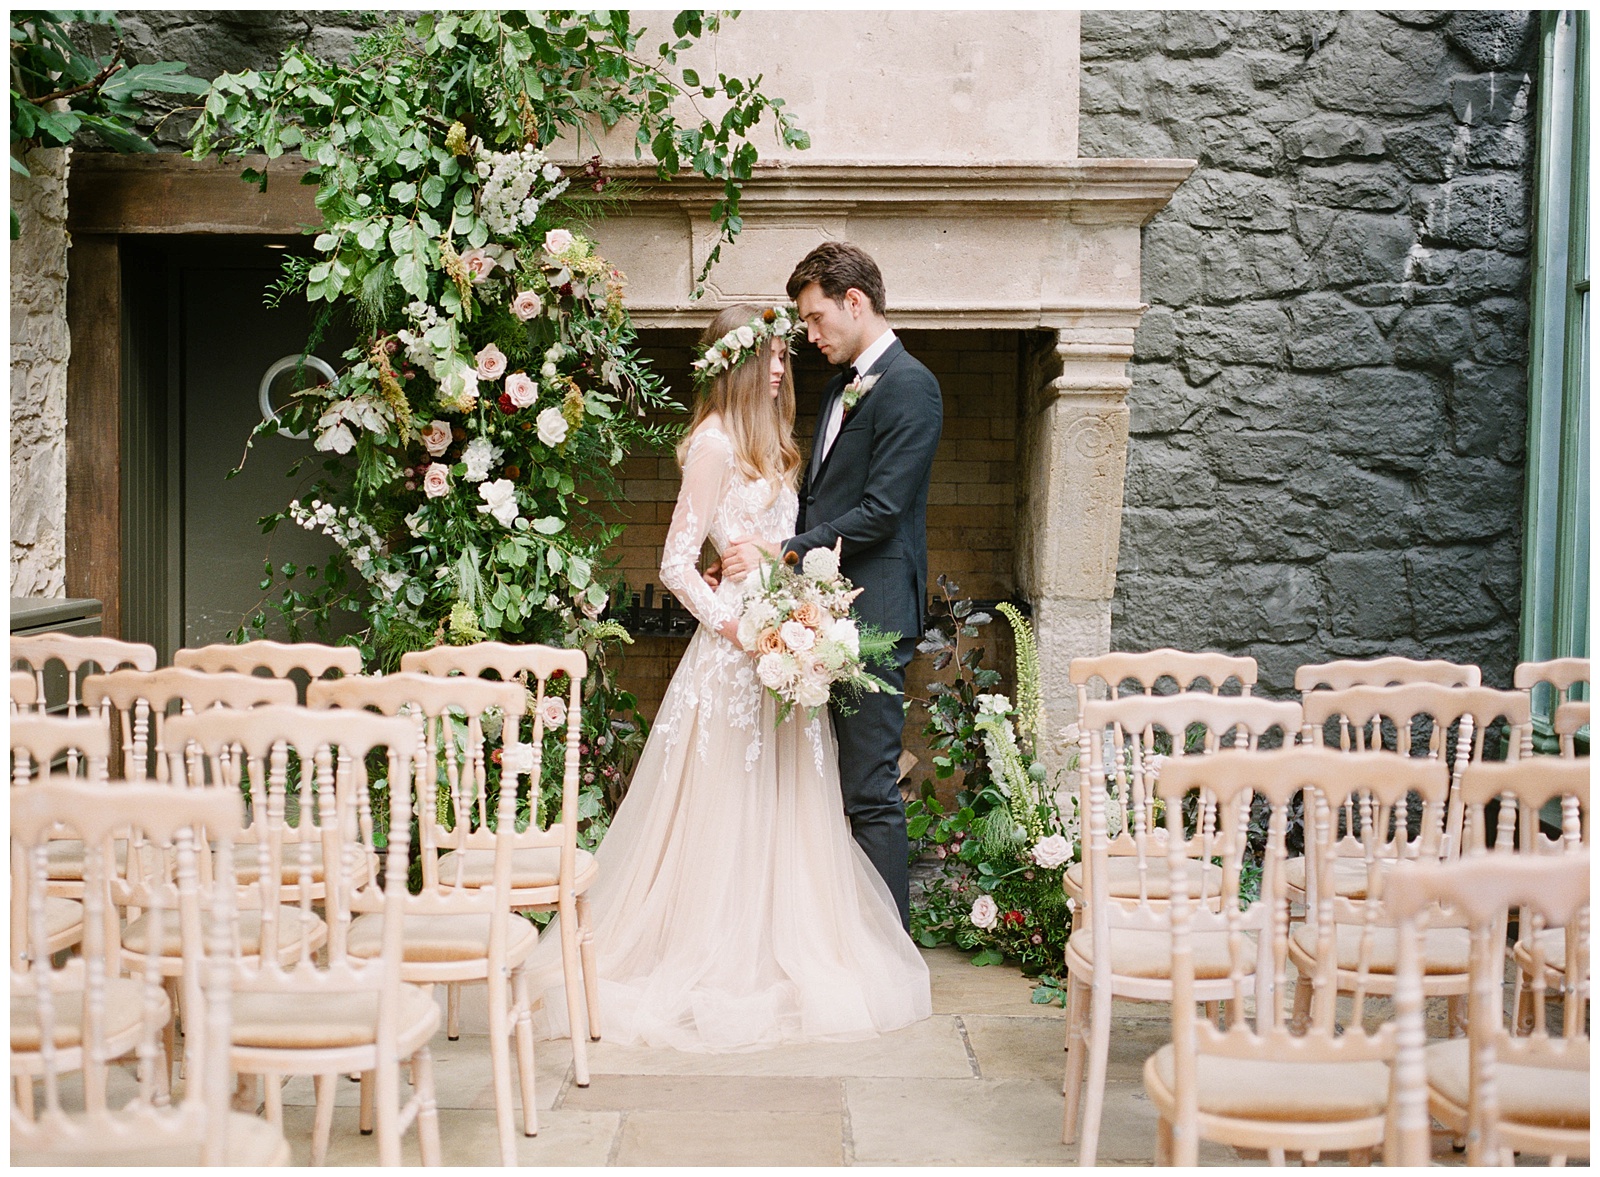 Destination Wedding Photographer | Ireland Destination Wedding Photography | Cliff at Lyons Wedding Photography | Sarah Sunstrom Photography_0036.jpg